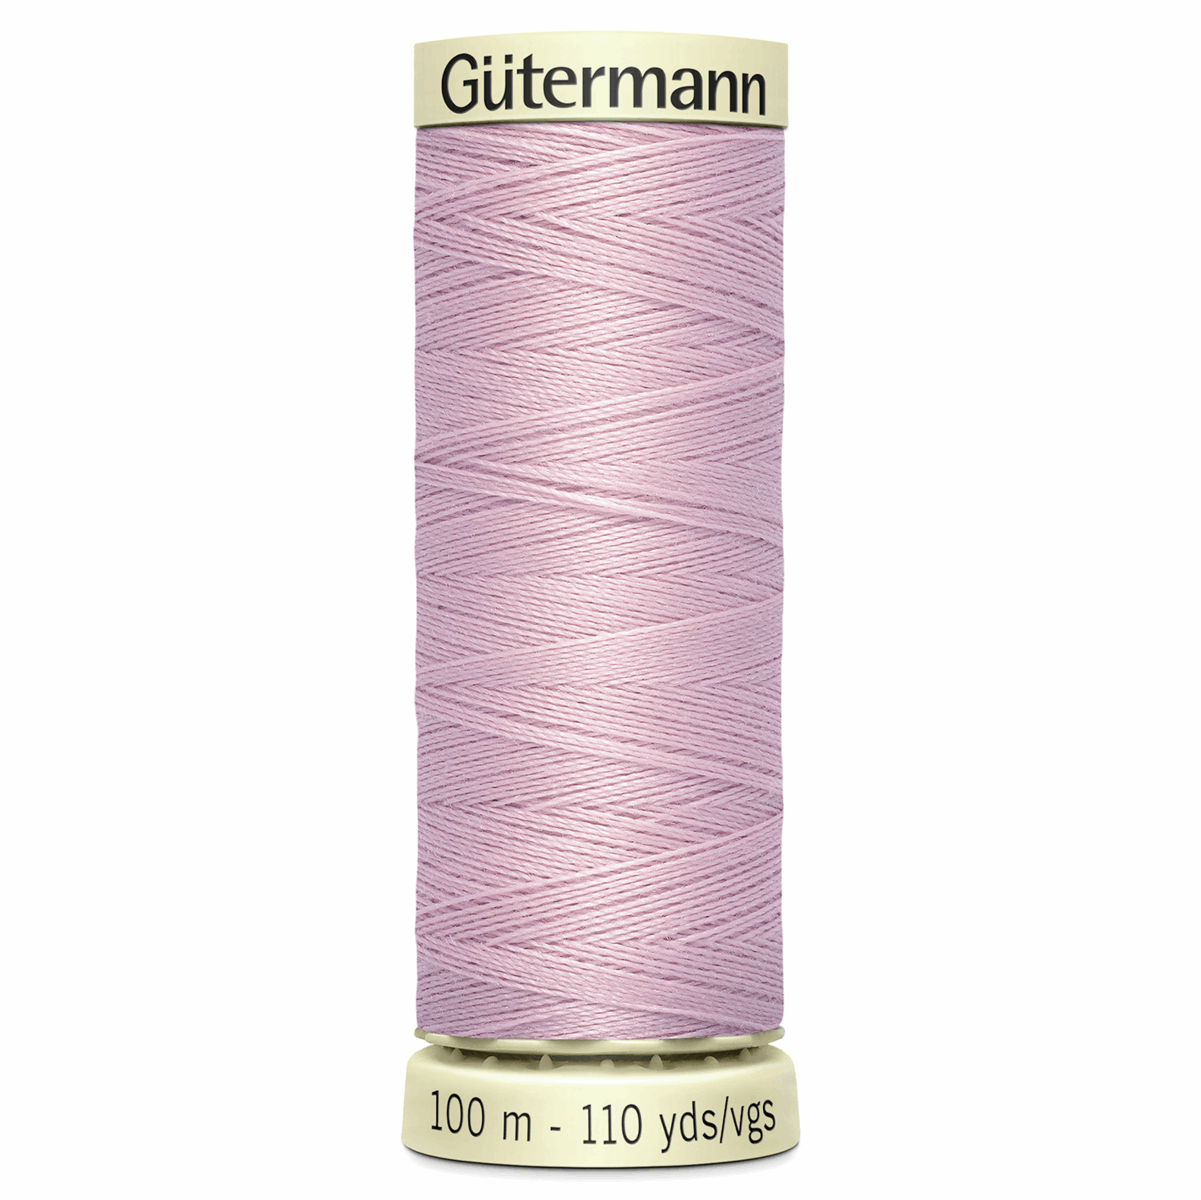 Gutermann Sew-All Thread 100m - Thousand Island (#662)